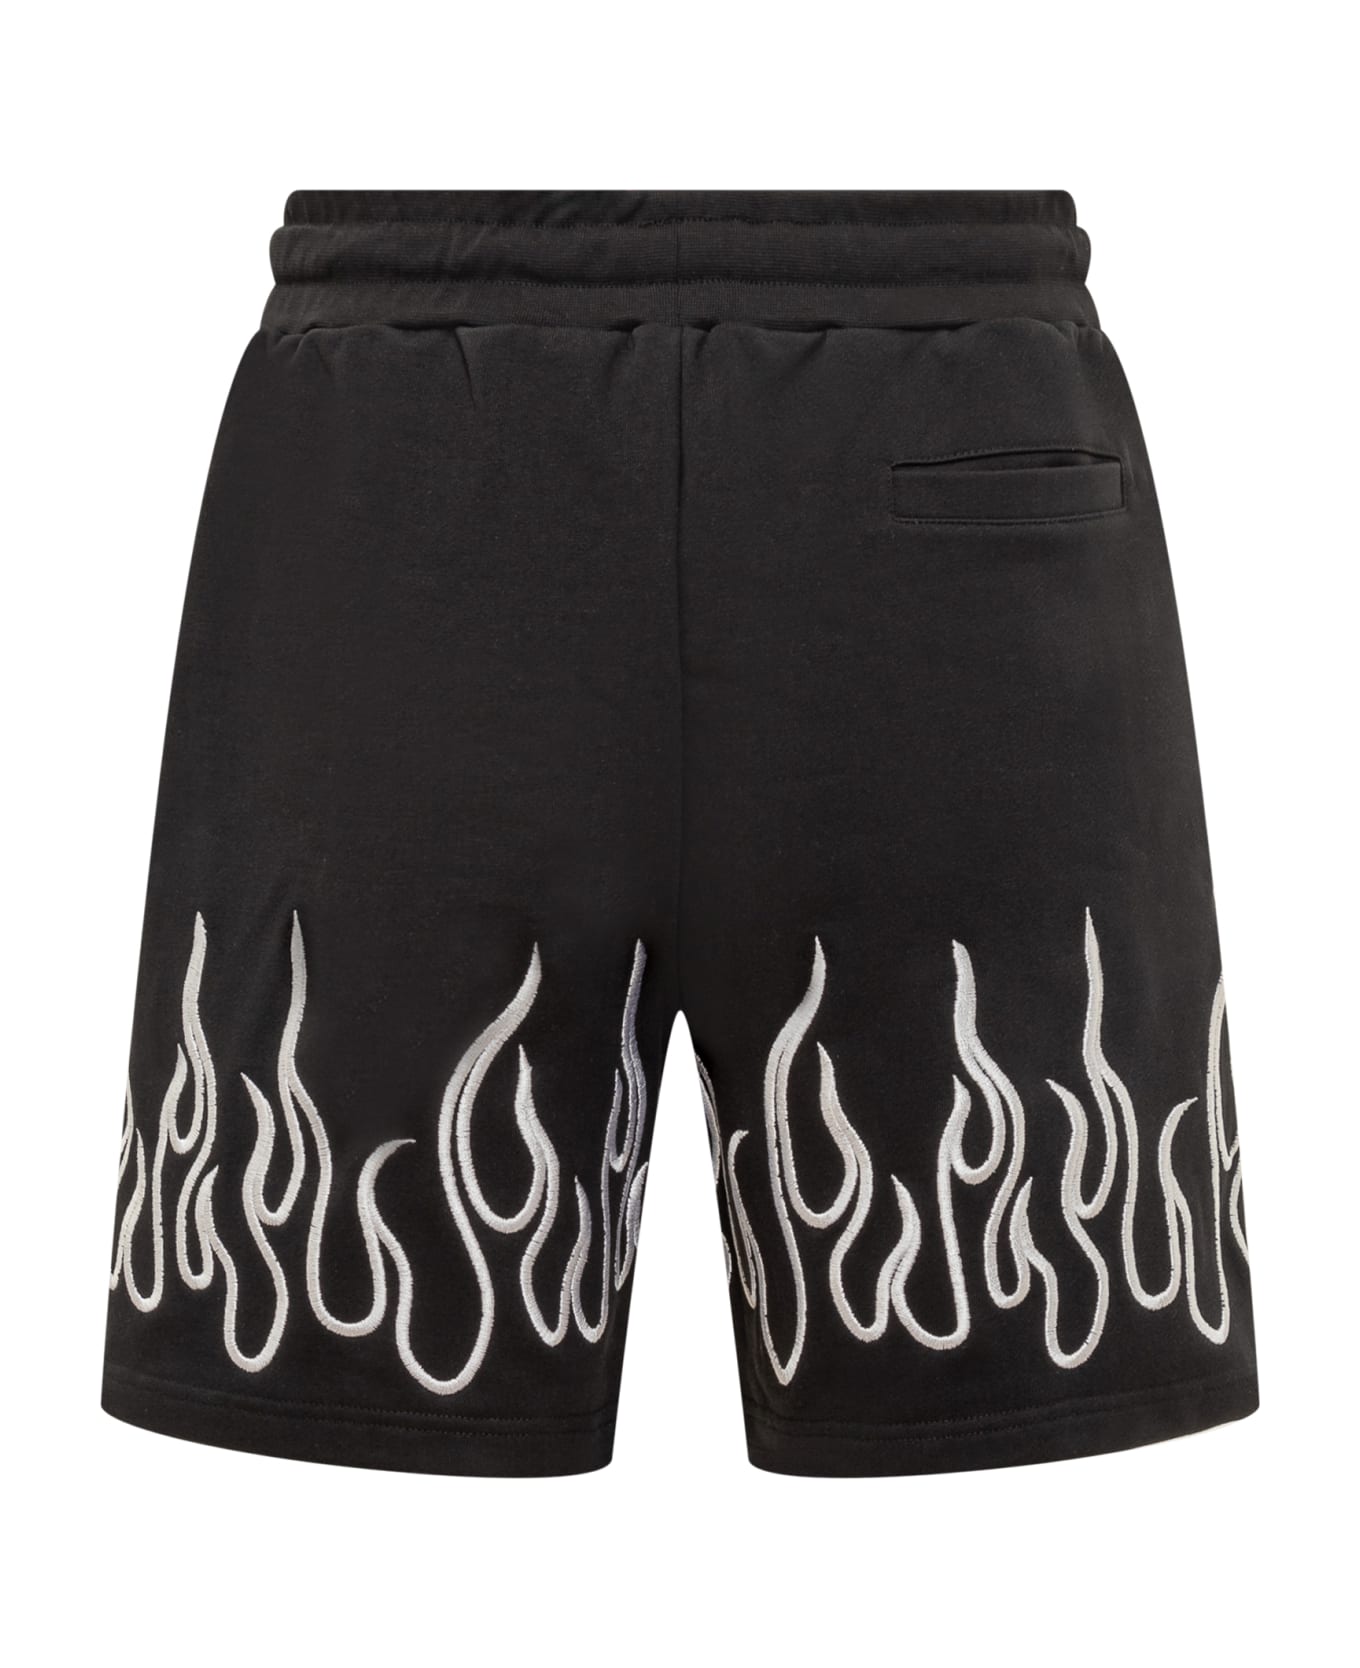 Vision of Super Flames Shorts